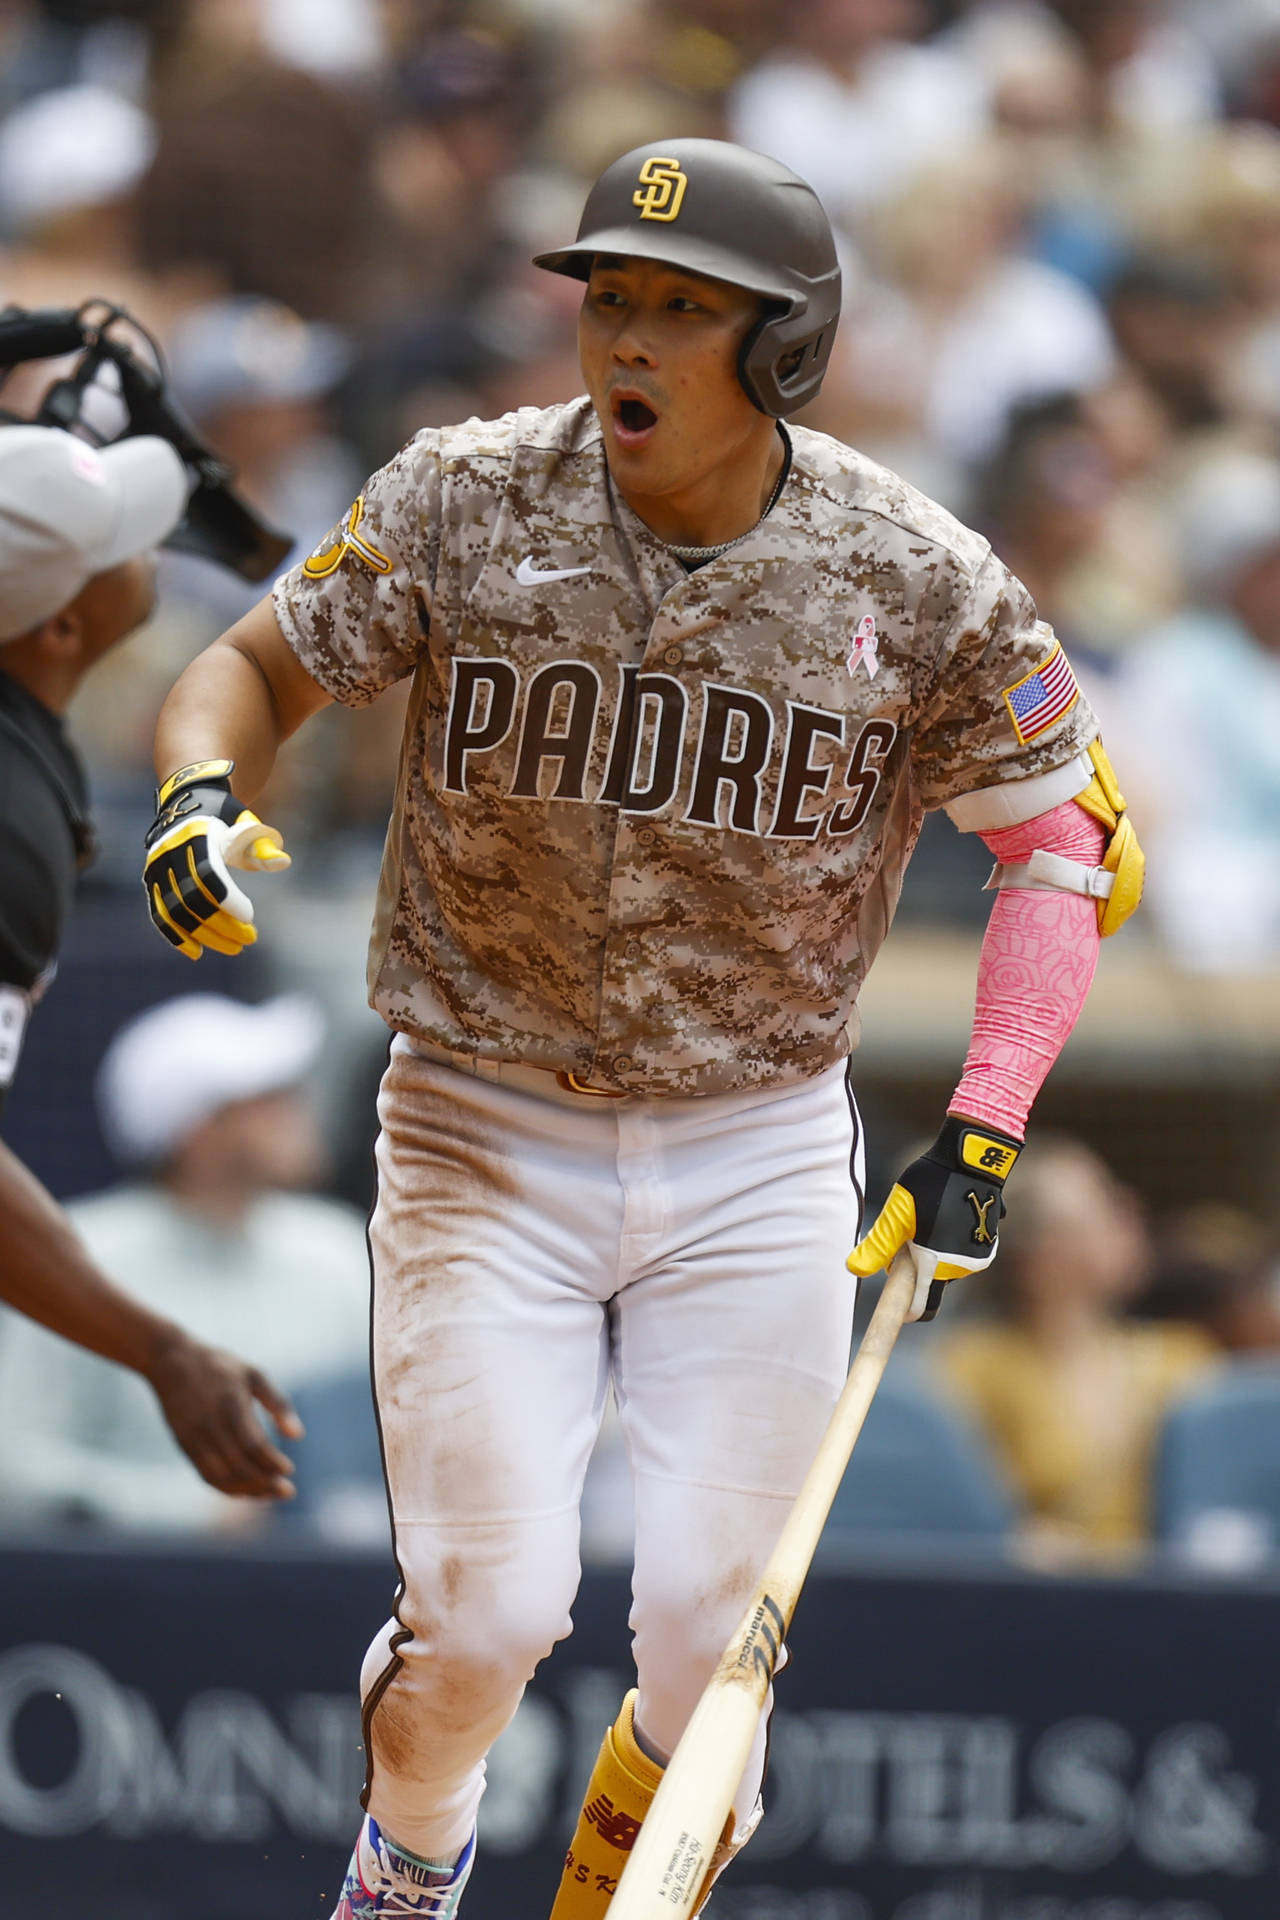 Alfaro mashes pinch-hit 3-run HR in 9th, Padres win 3-2